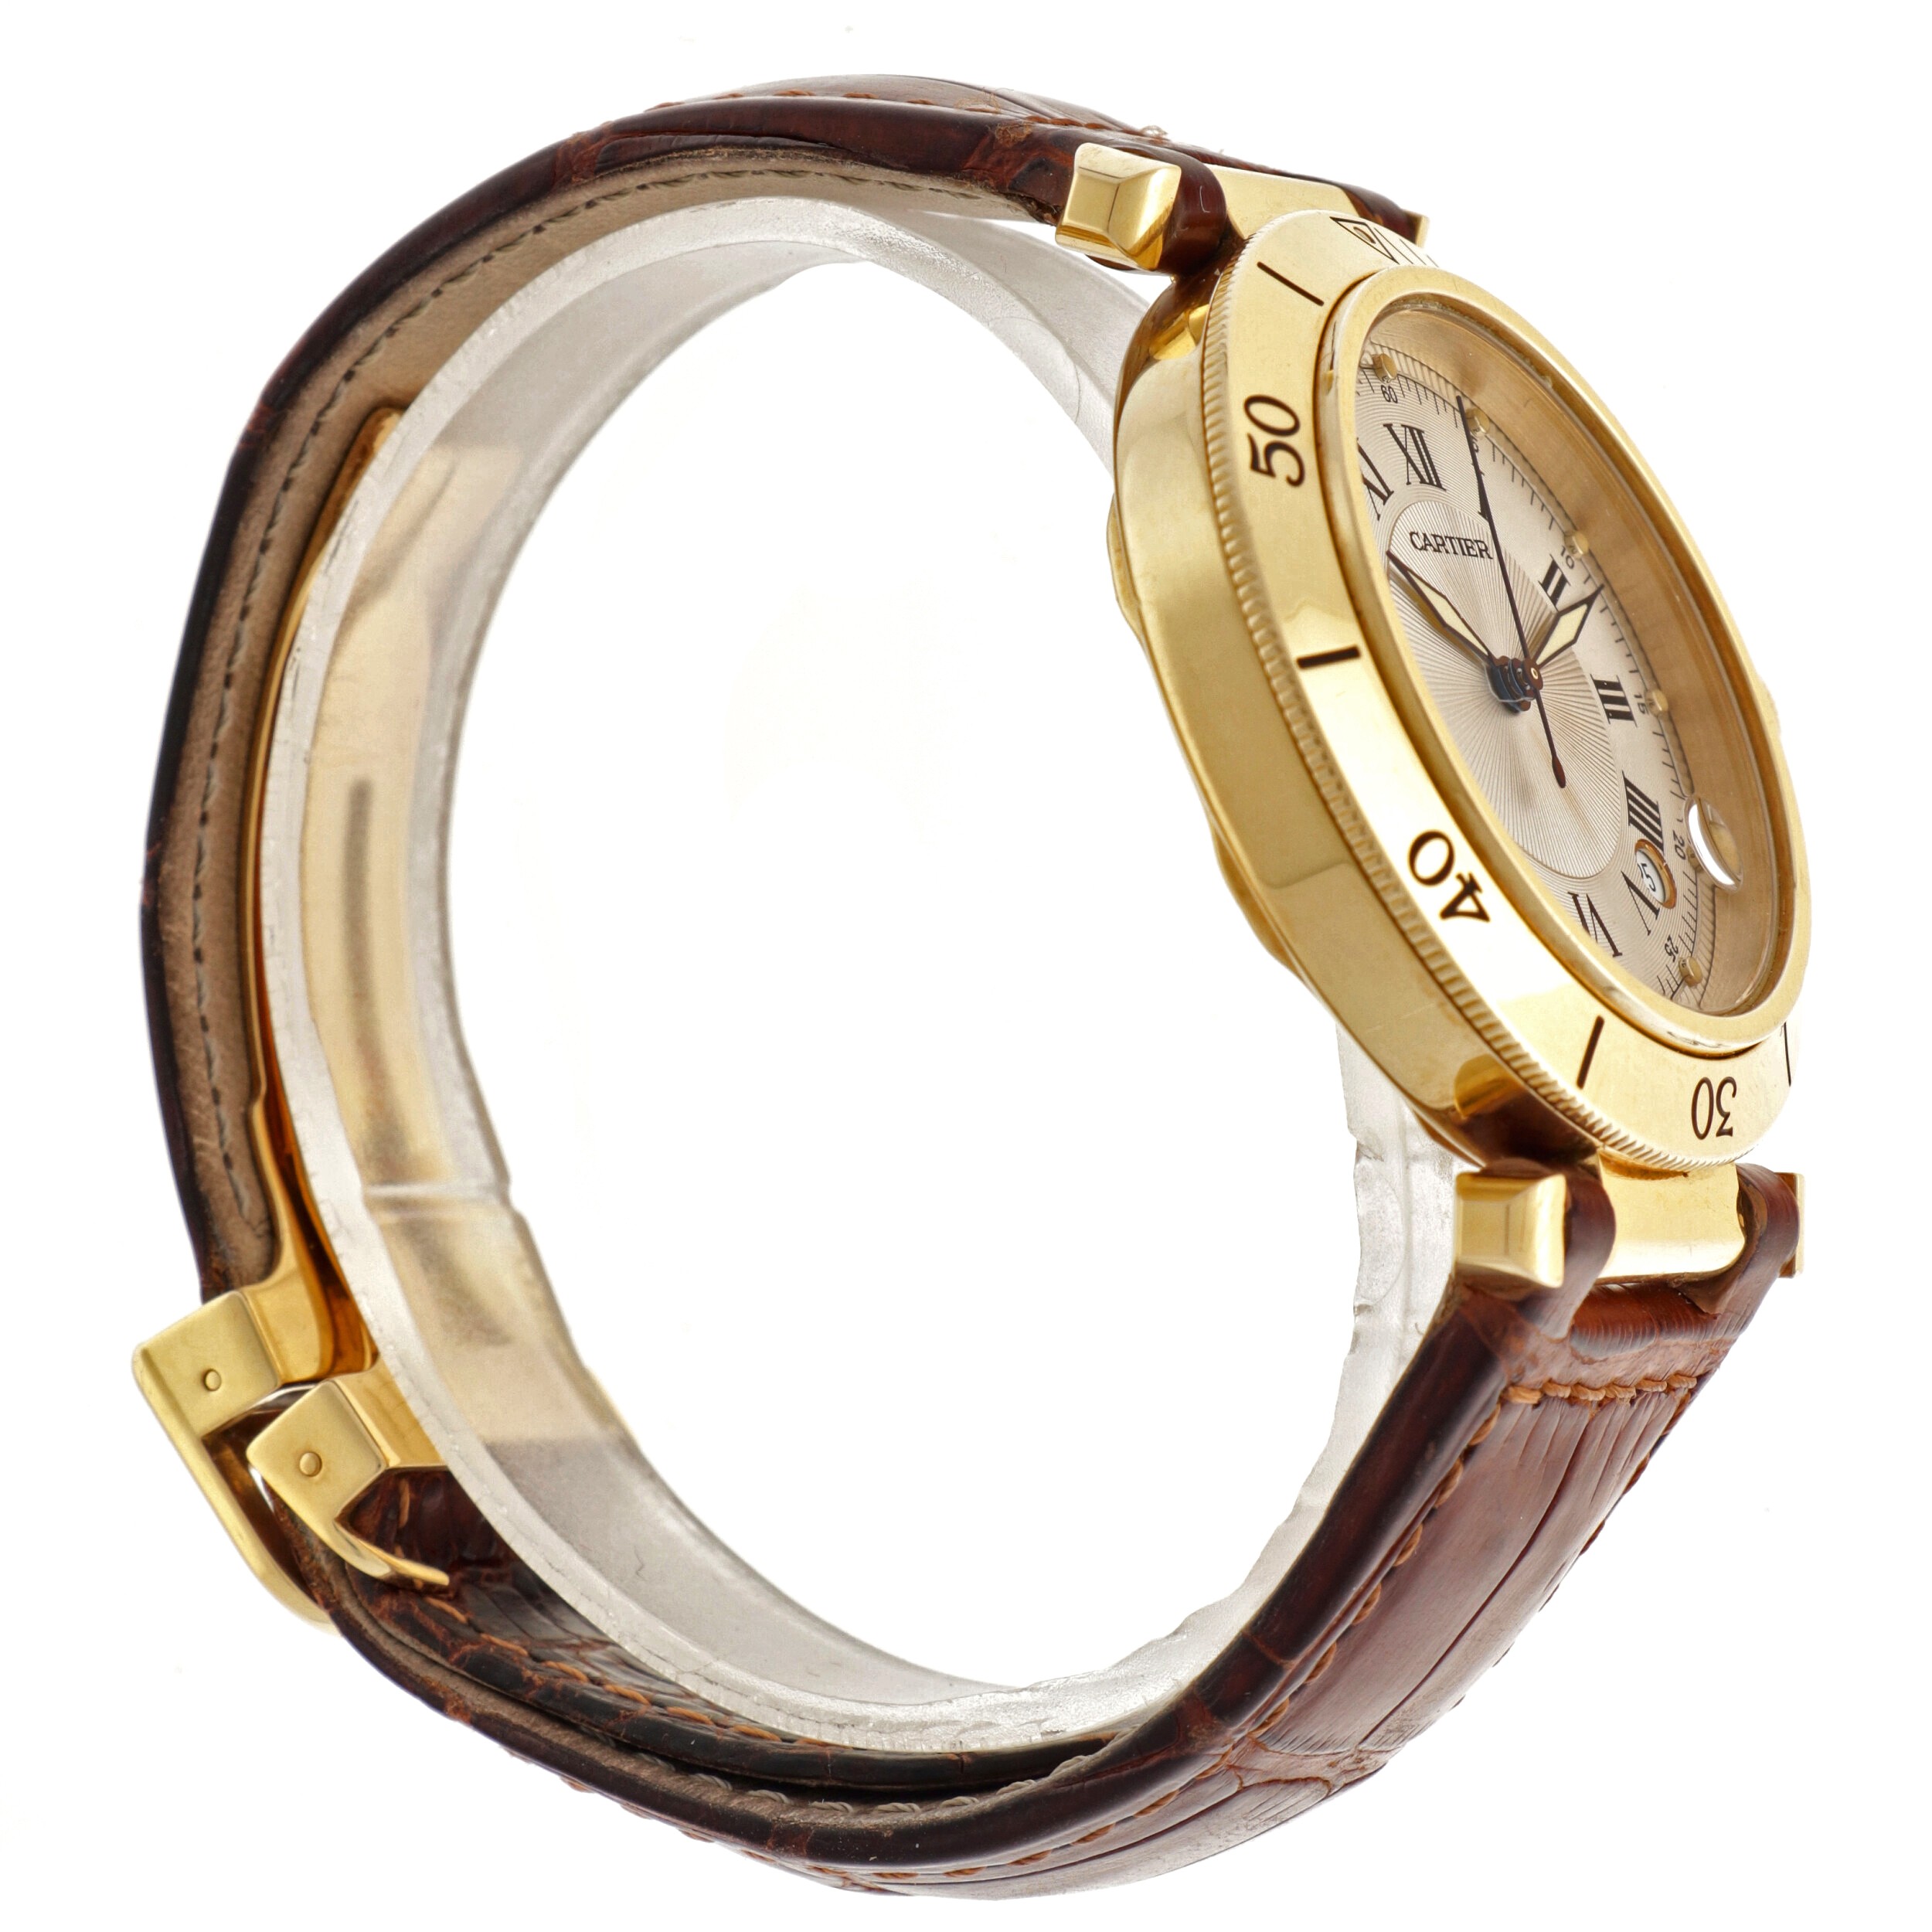 No Reserve - Cartier Pasha 18K. 1027 - Men's watch. - Image 4 of 6